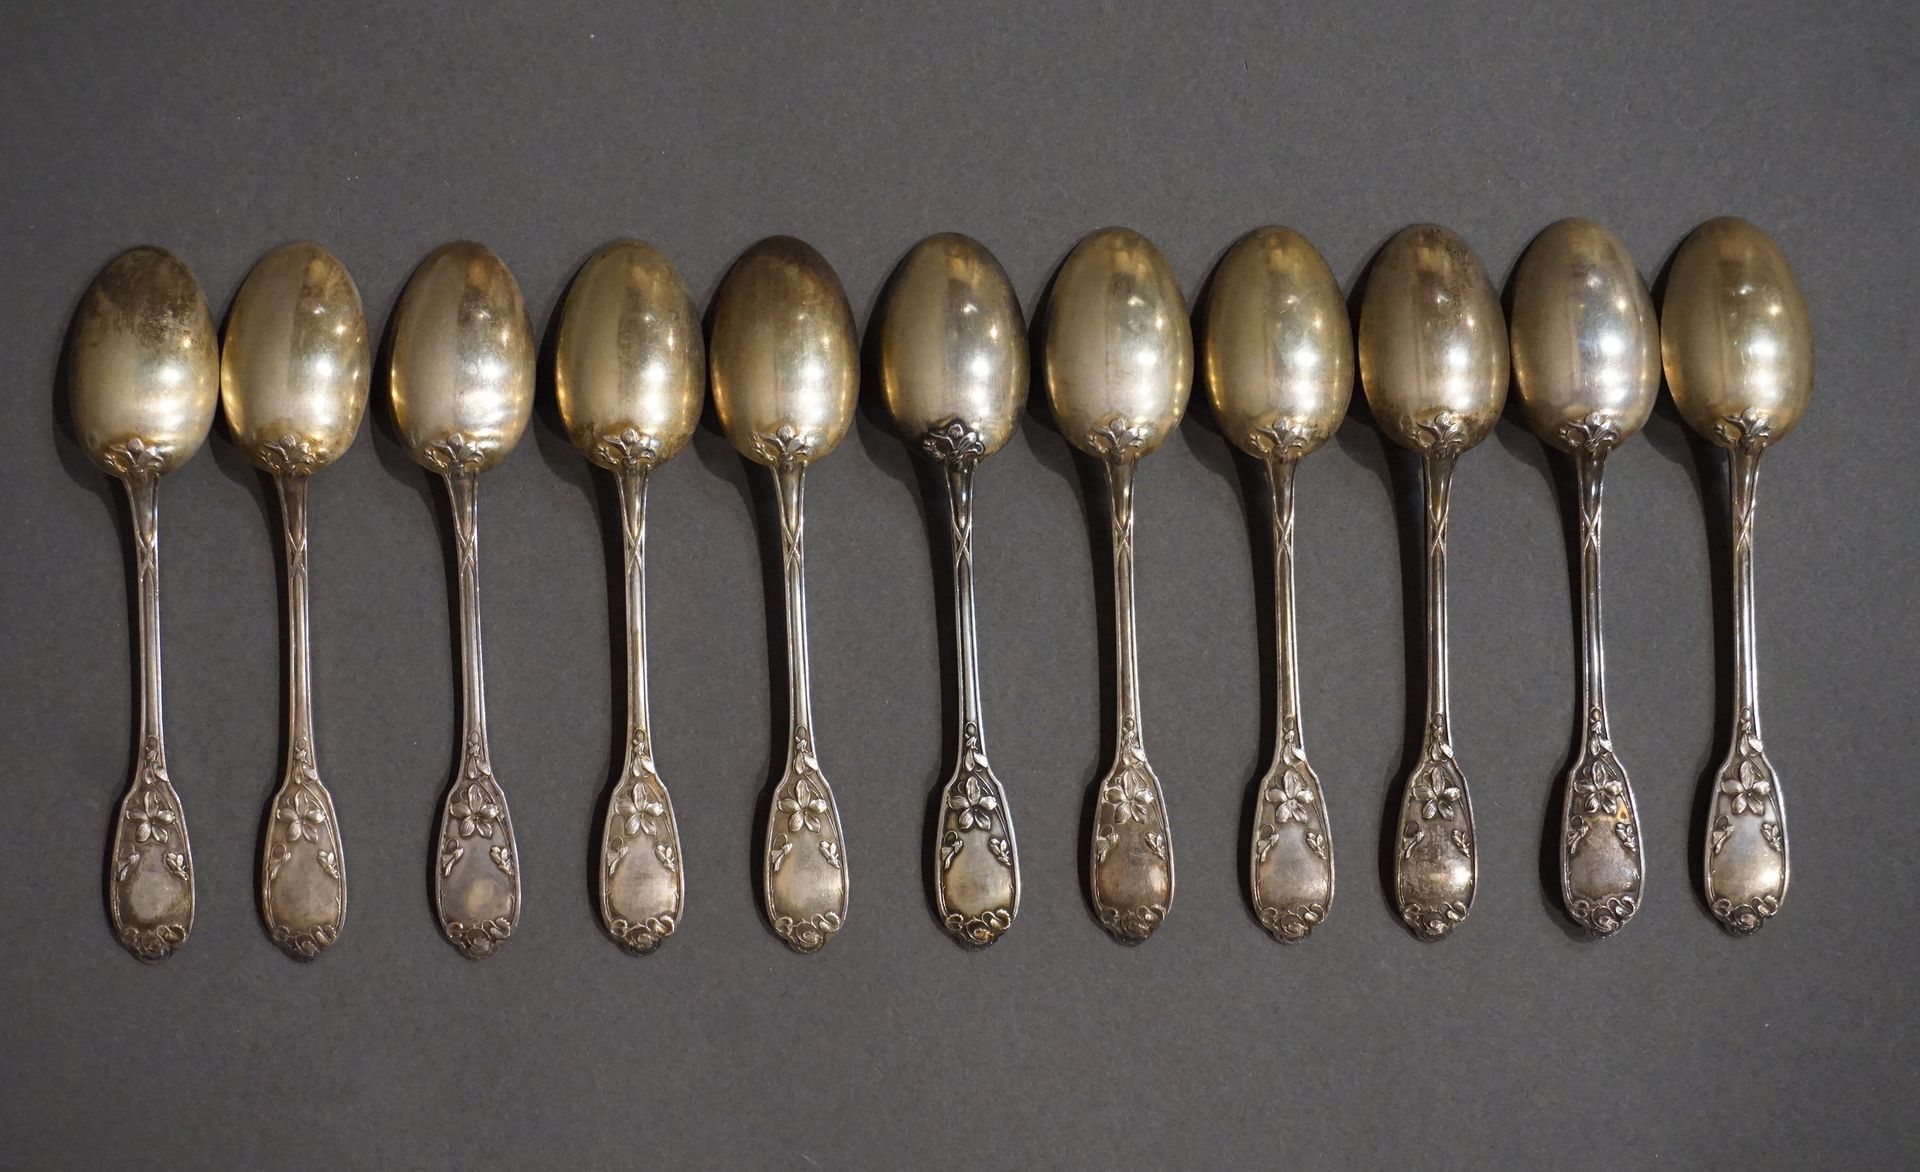 PETITES CUILLERES 11把银质和镀金的小勺子，上面有花纹装饰（244克）